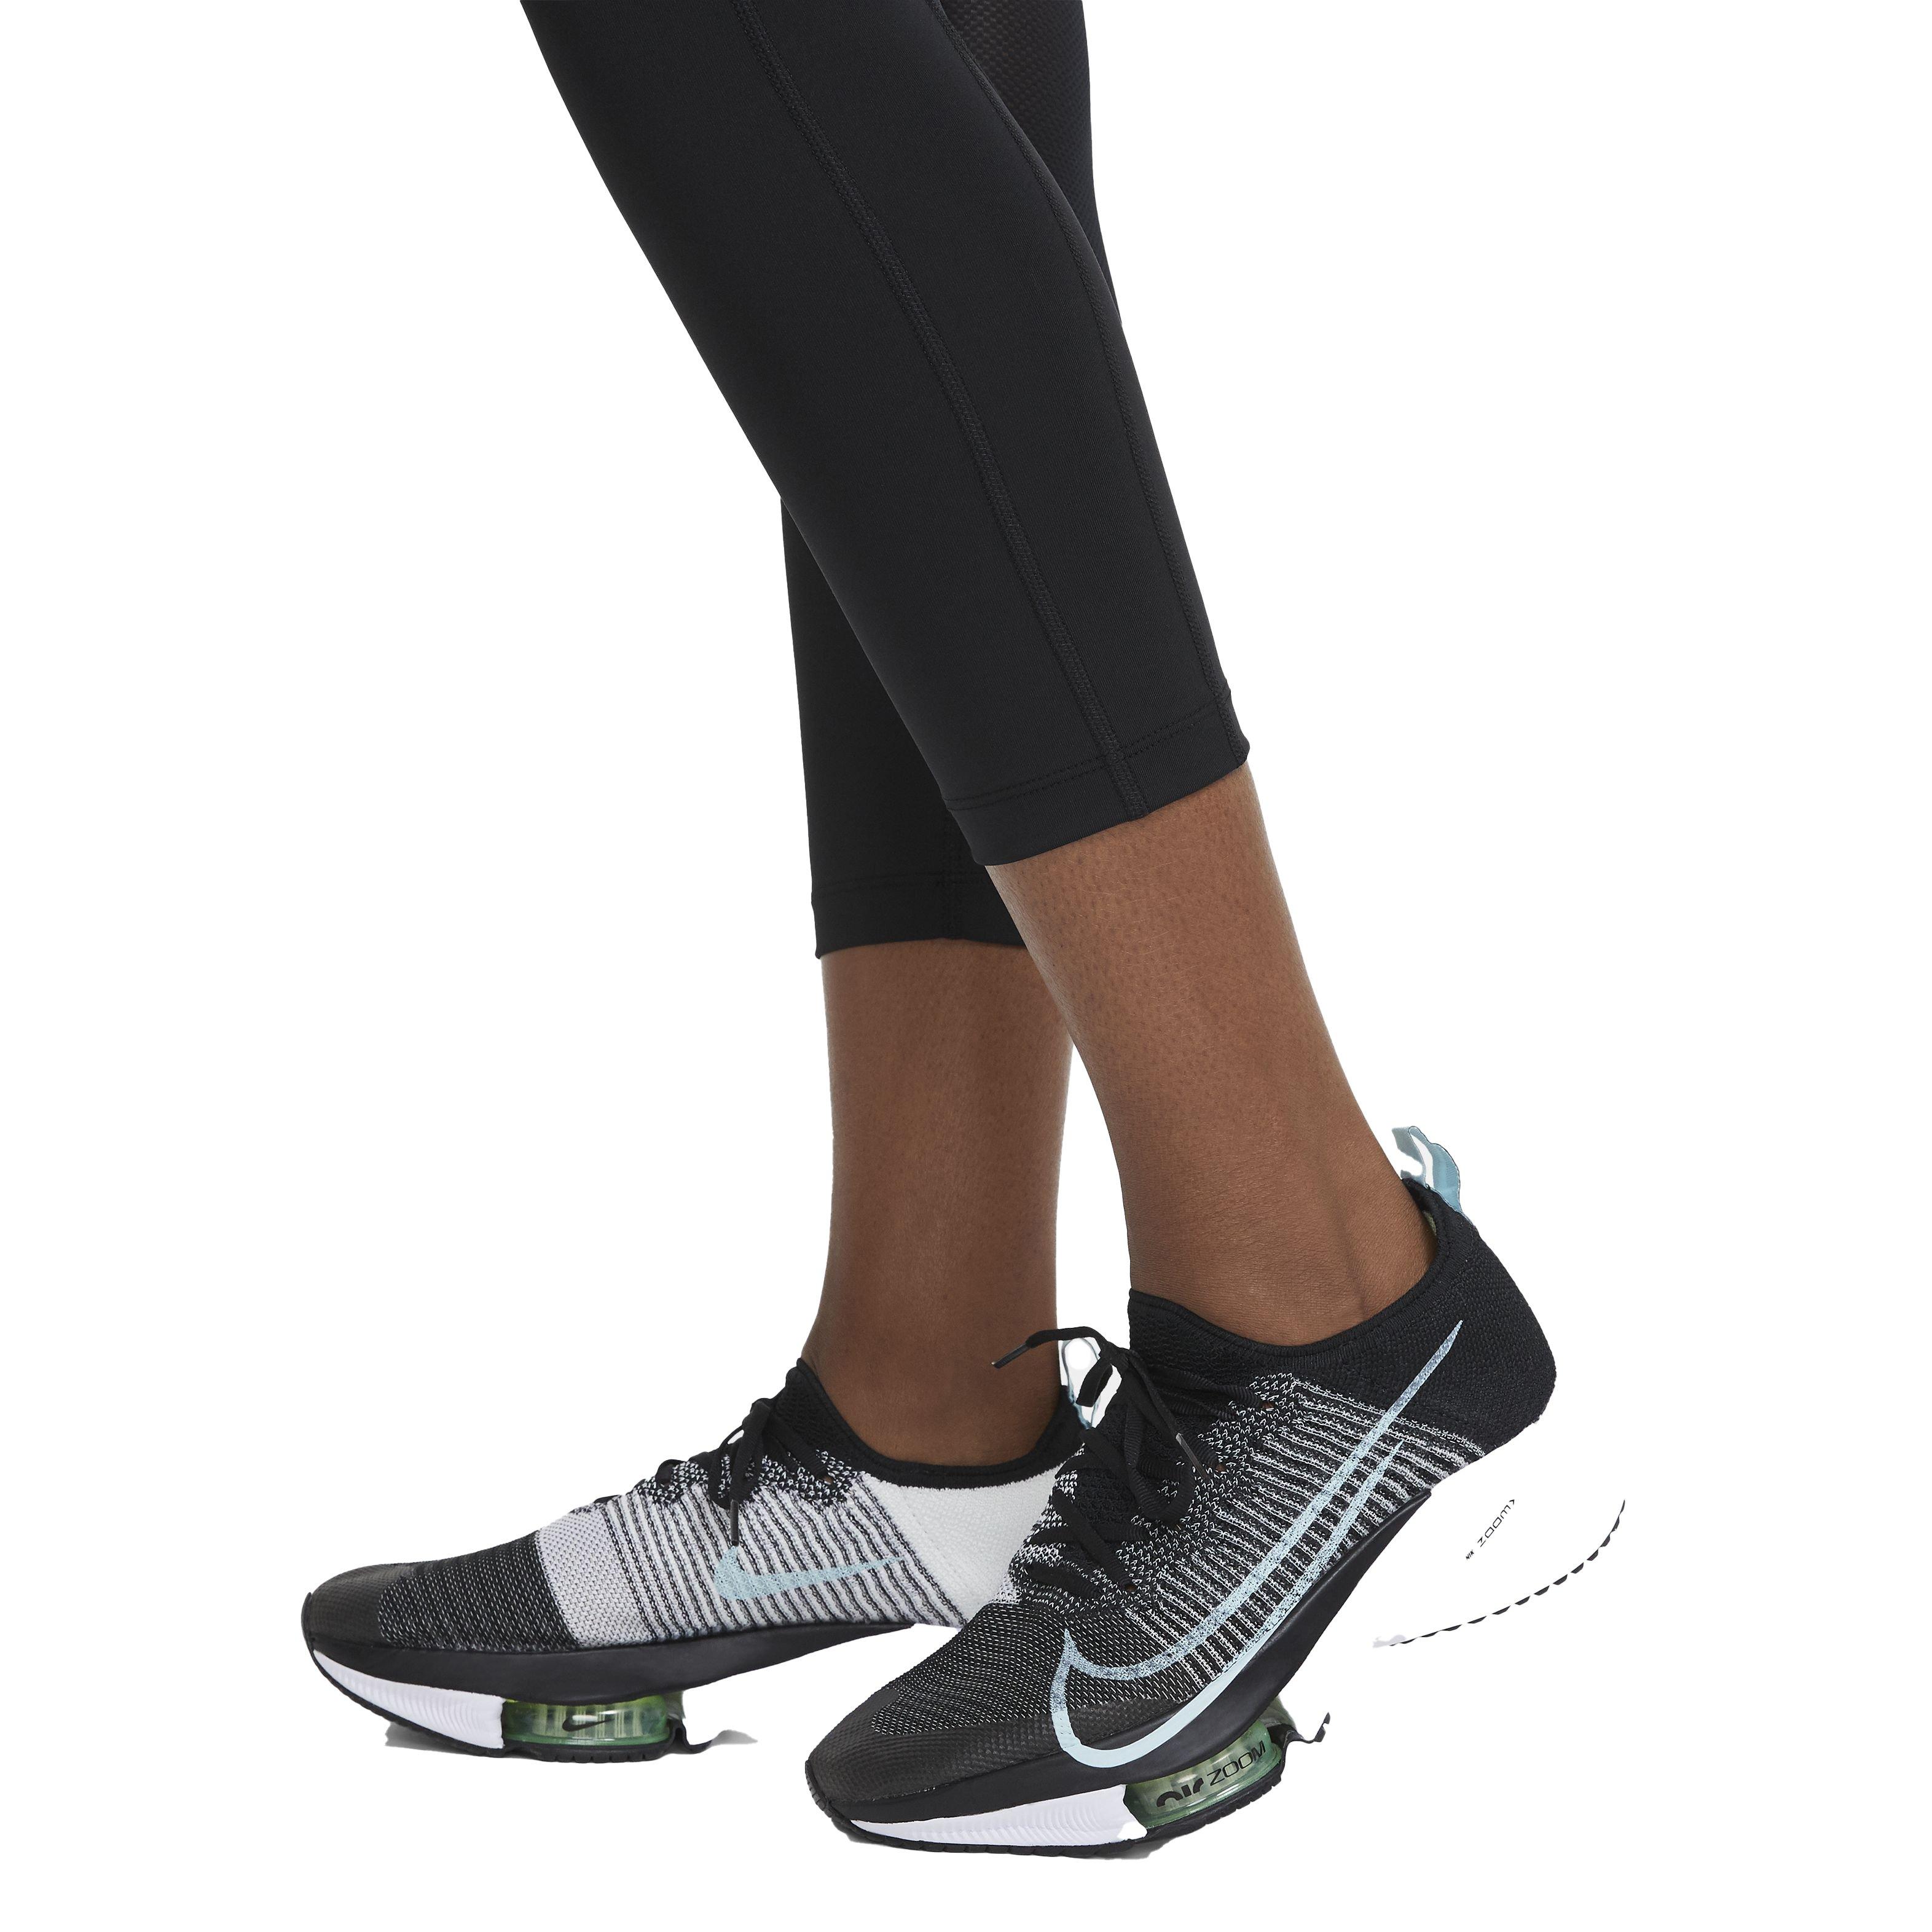 Nike Women's Dri-FIT Mid-Rise Fast Crop Running Leggings - Hibbett